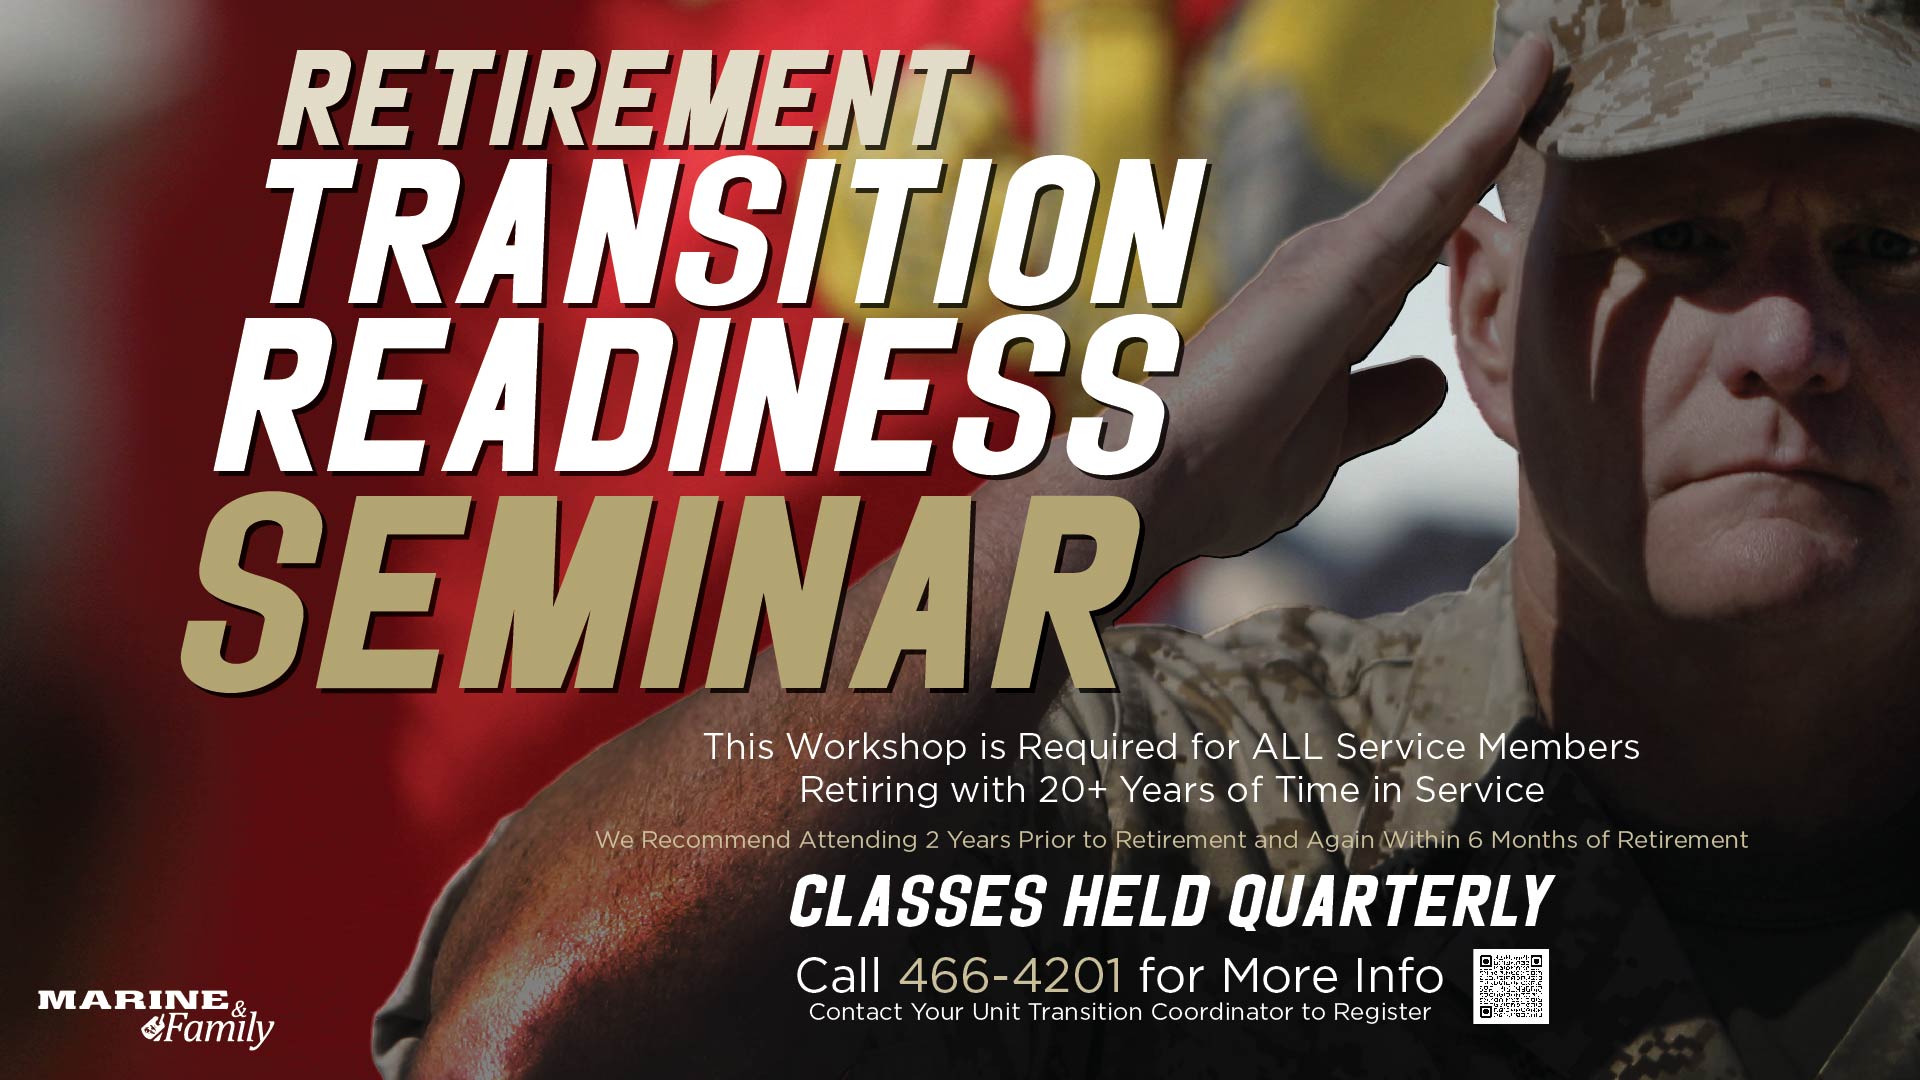 Retirement Transition Readiness Seminar